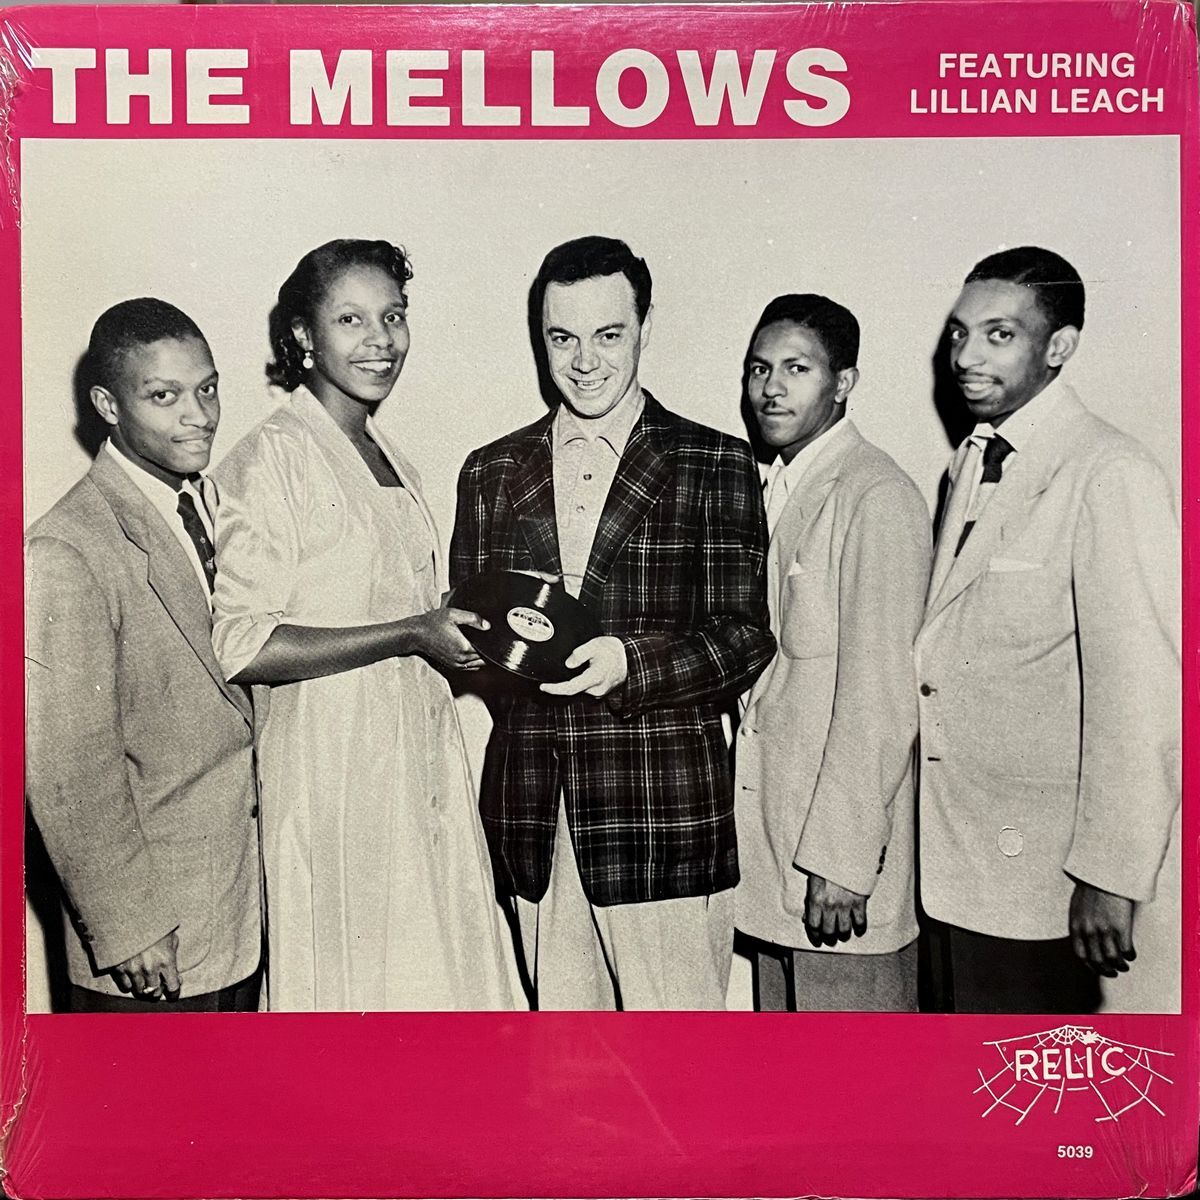 THE MELLOWS featuring LILLIAN LEACH (RELIC 5039...